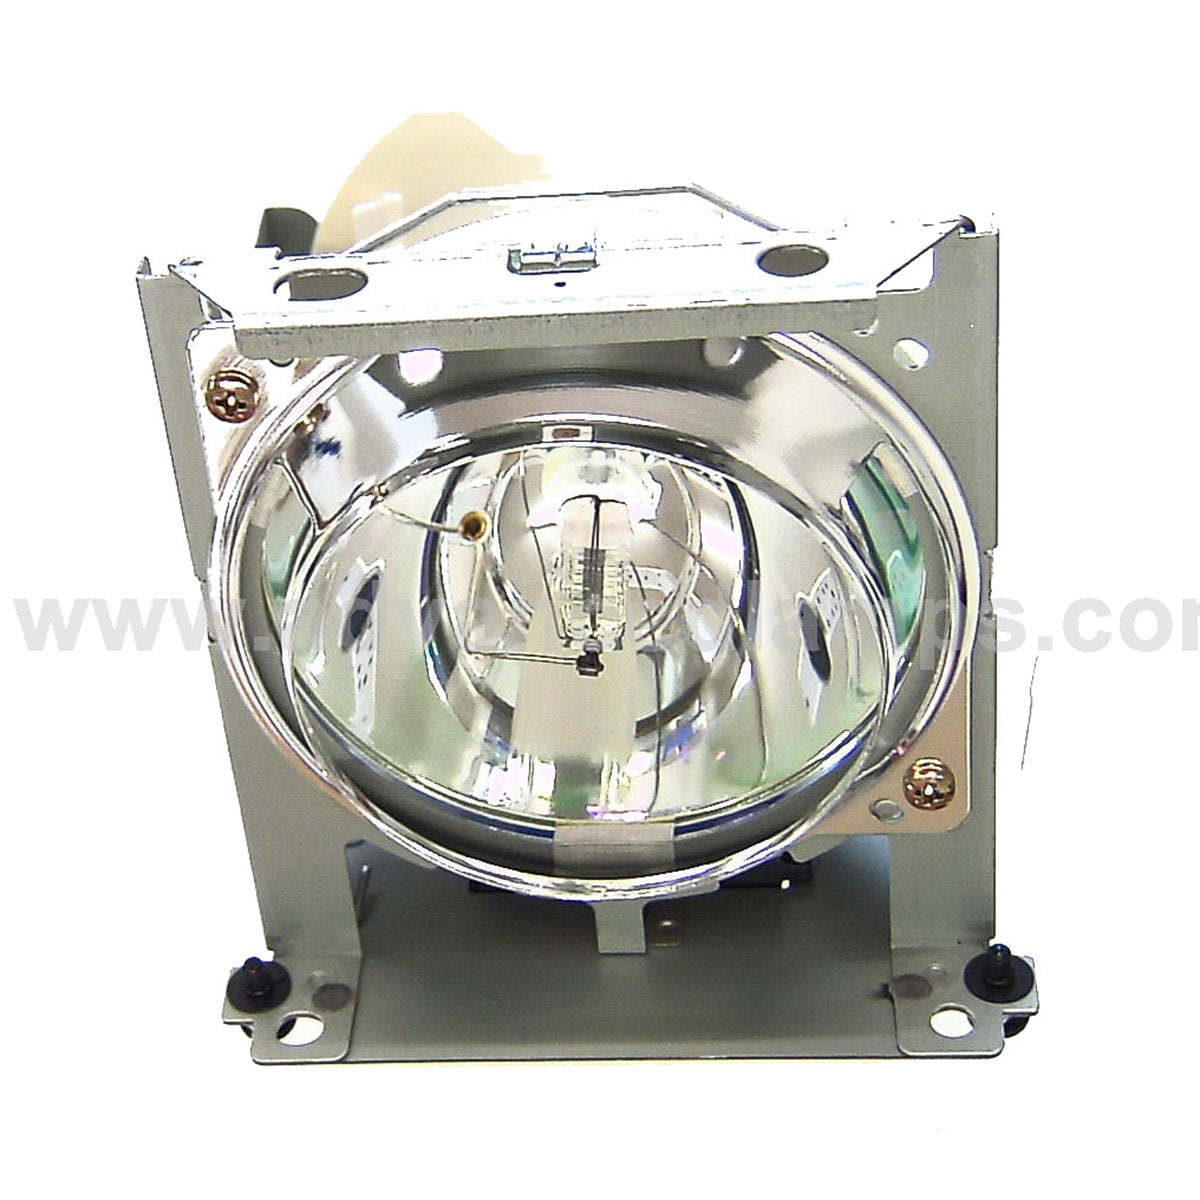 3M 78-6969-8461-2 Compatible Projector Lamp Module